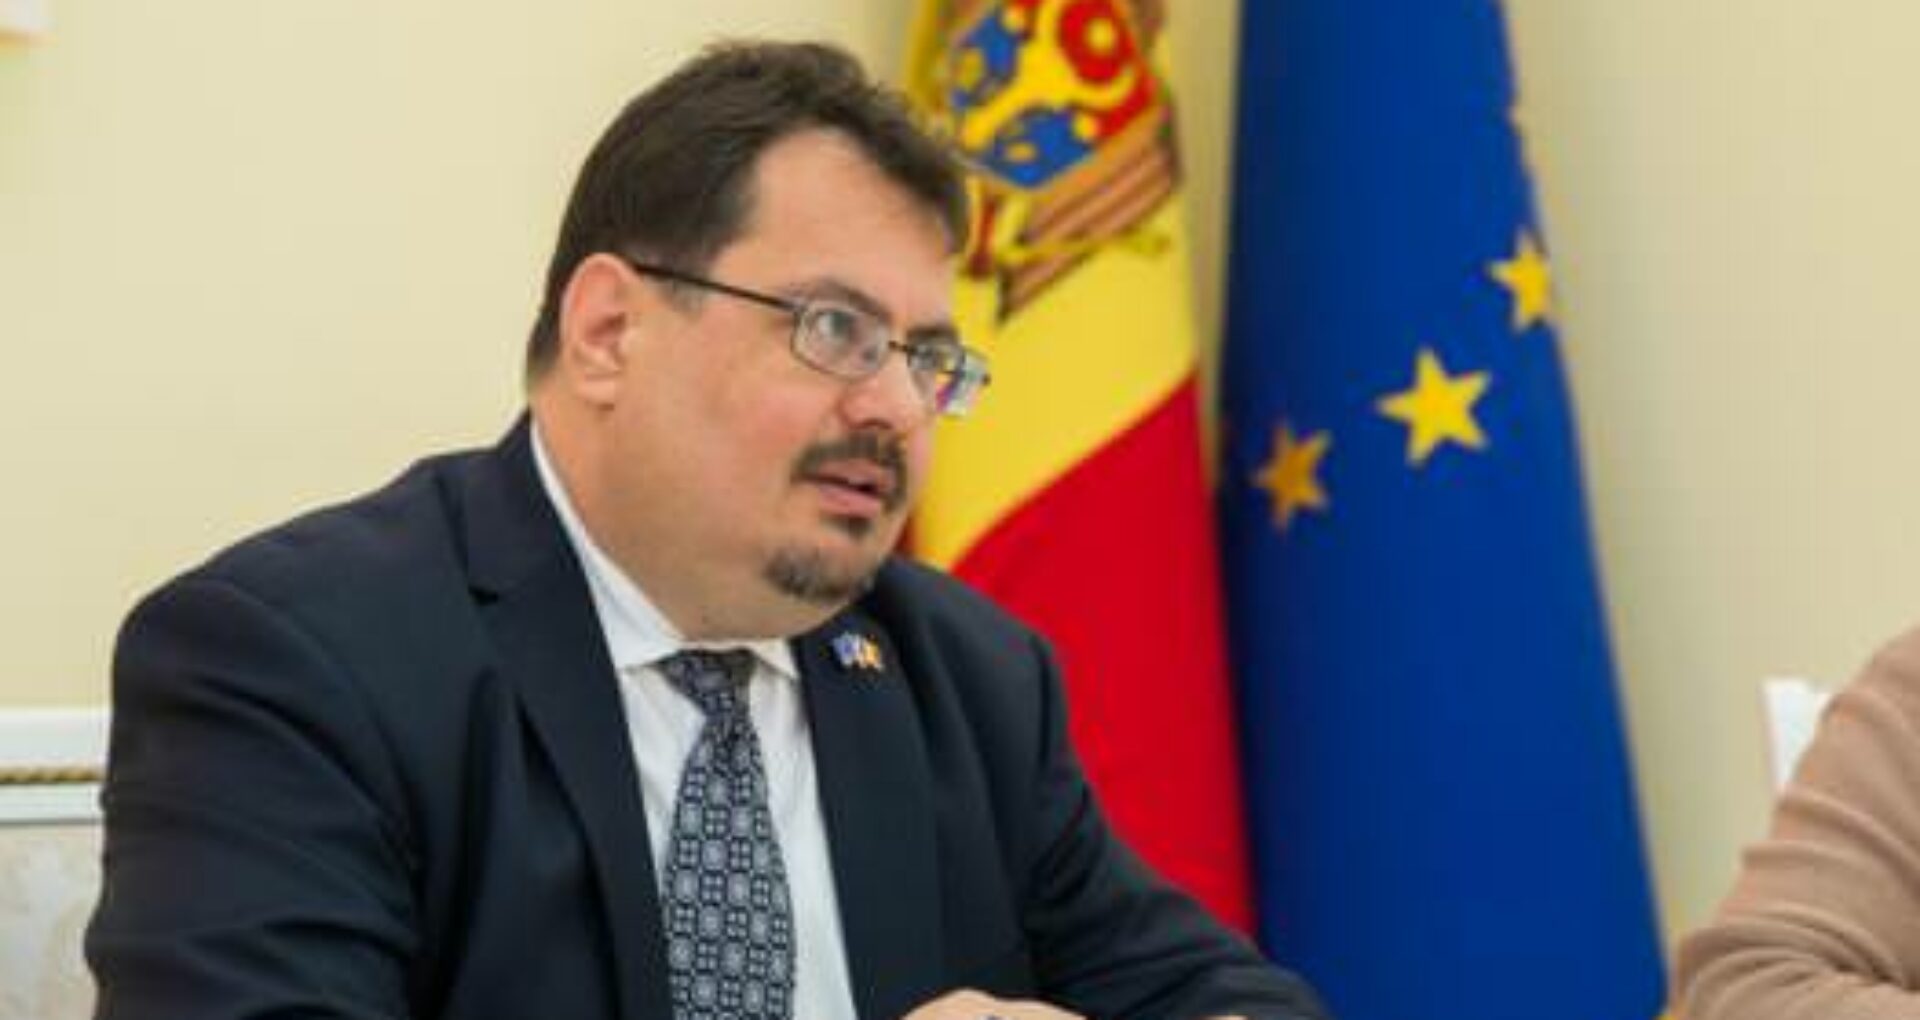 Presidential Elections in Moldova: the EU Ambassador to Chisinau Will Monitor the Electoral Process